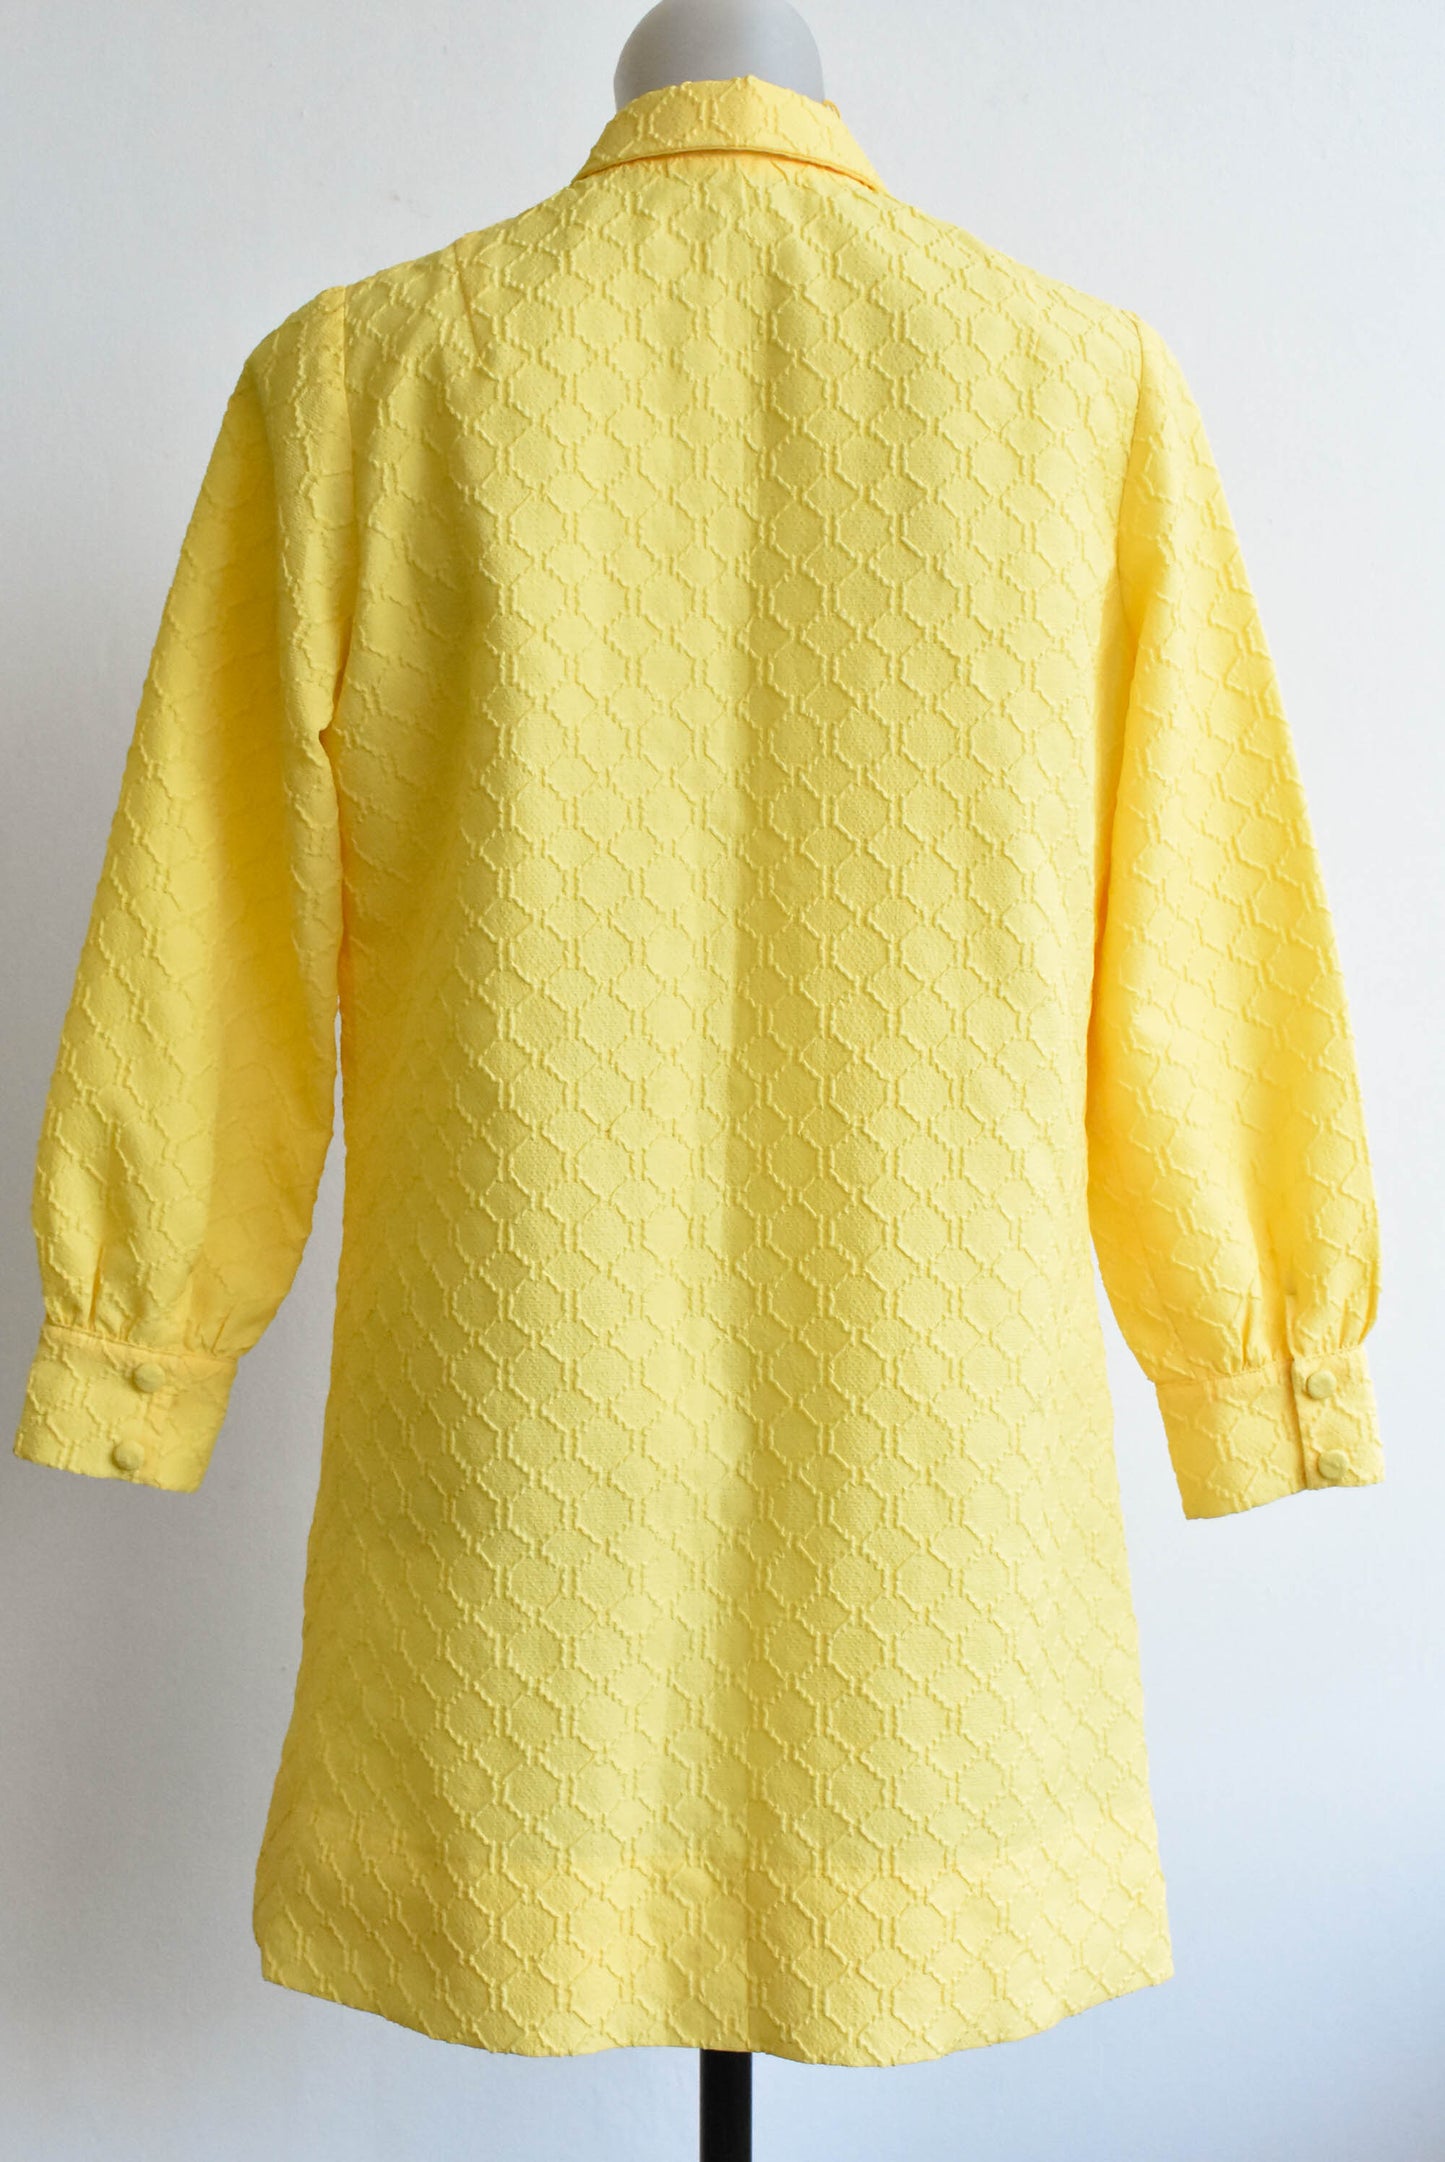 Retro "super 60s" textured yellow dress, size M